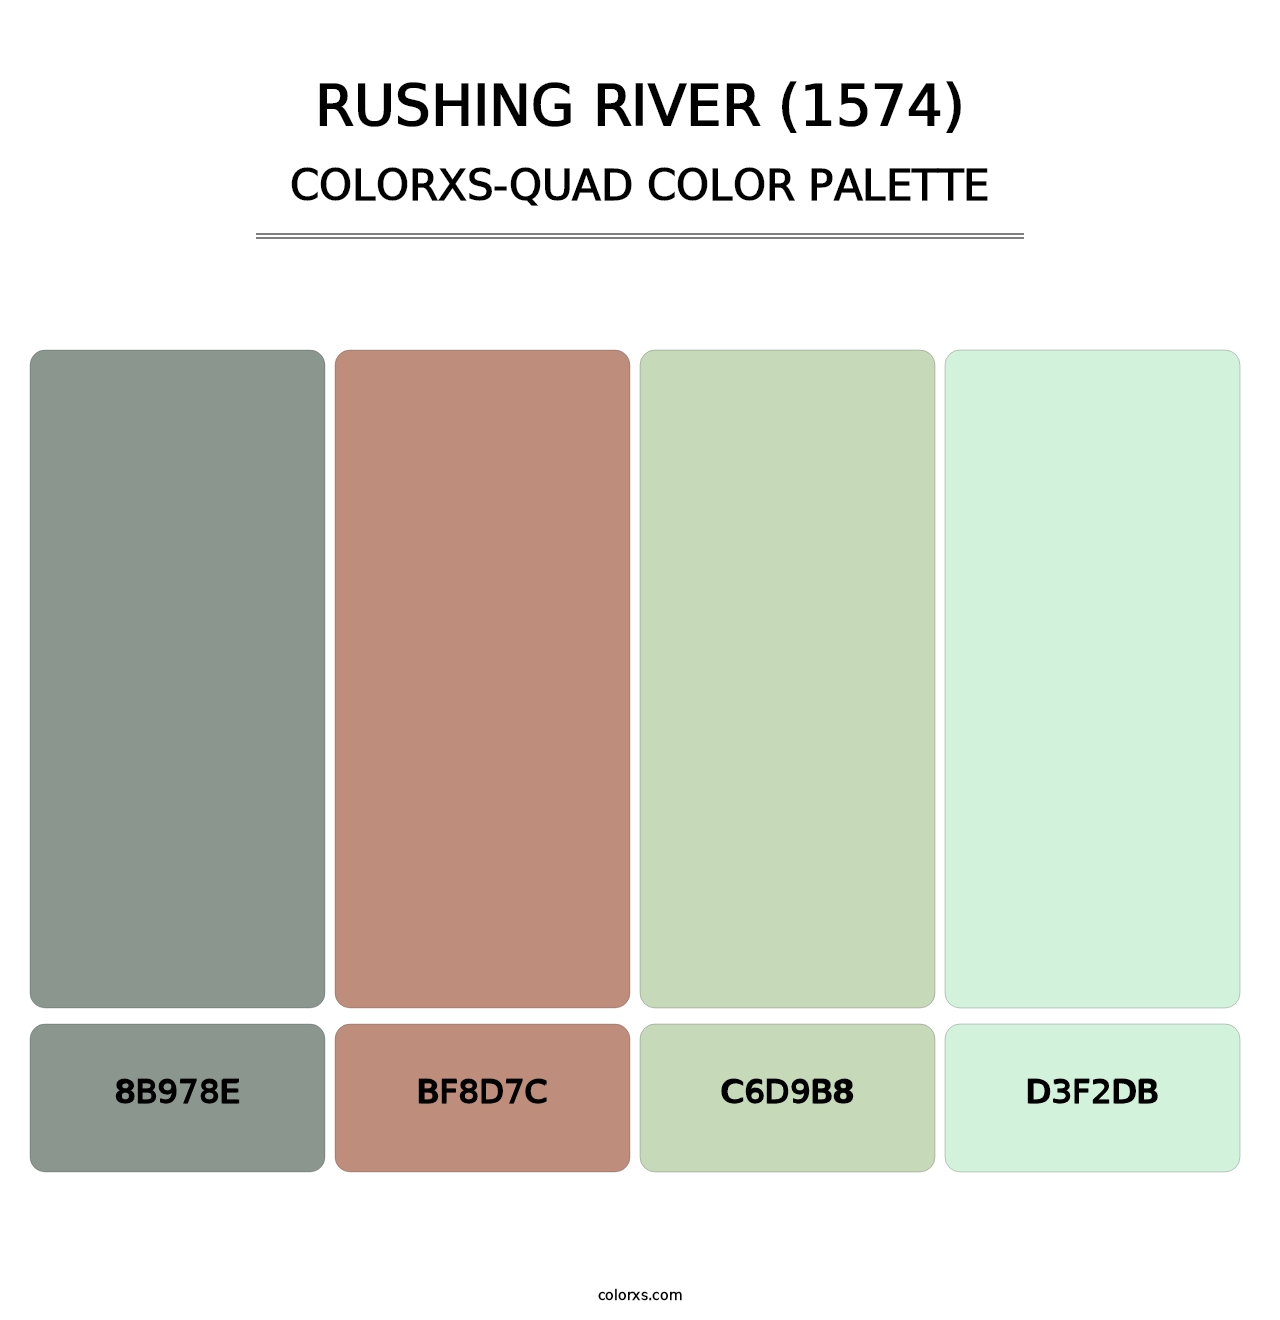 Rushing River (1574) - Colorxs Quad Palette